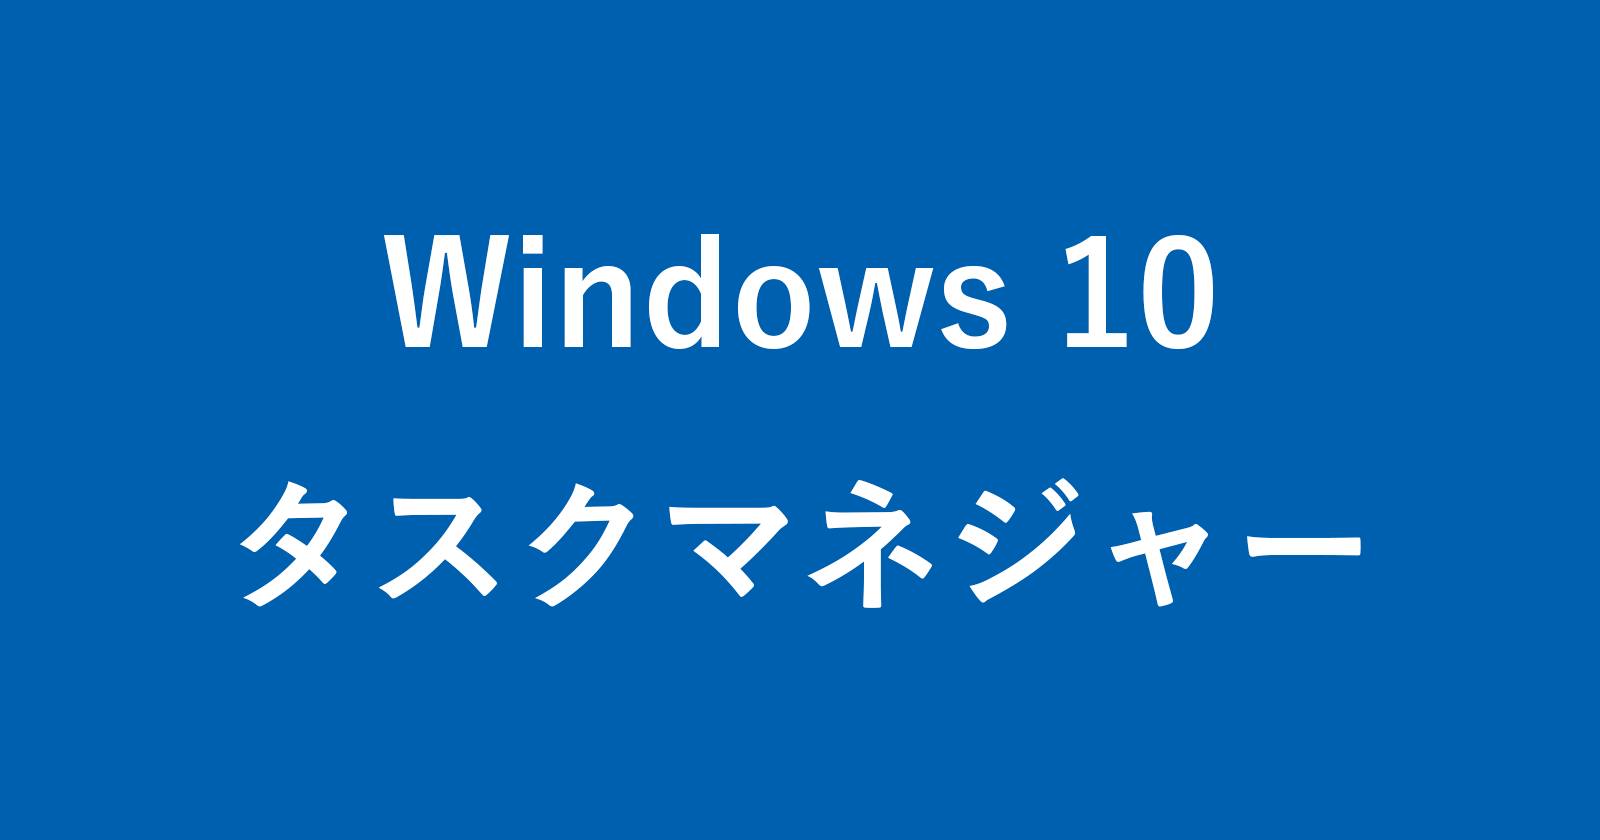 windows 10 task manager